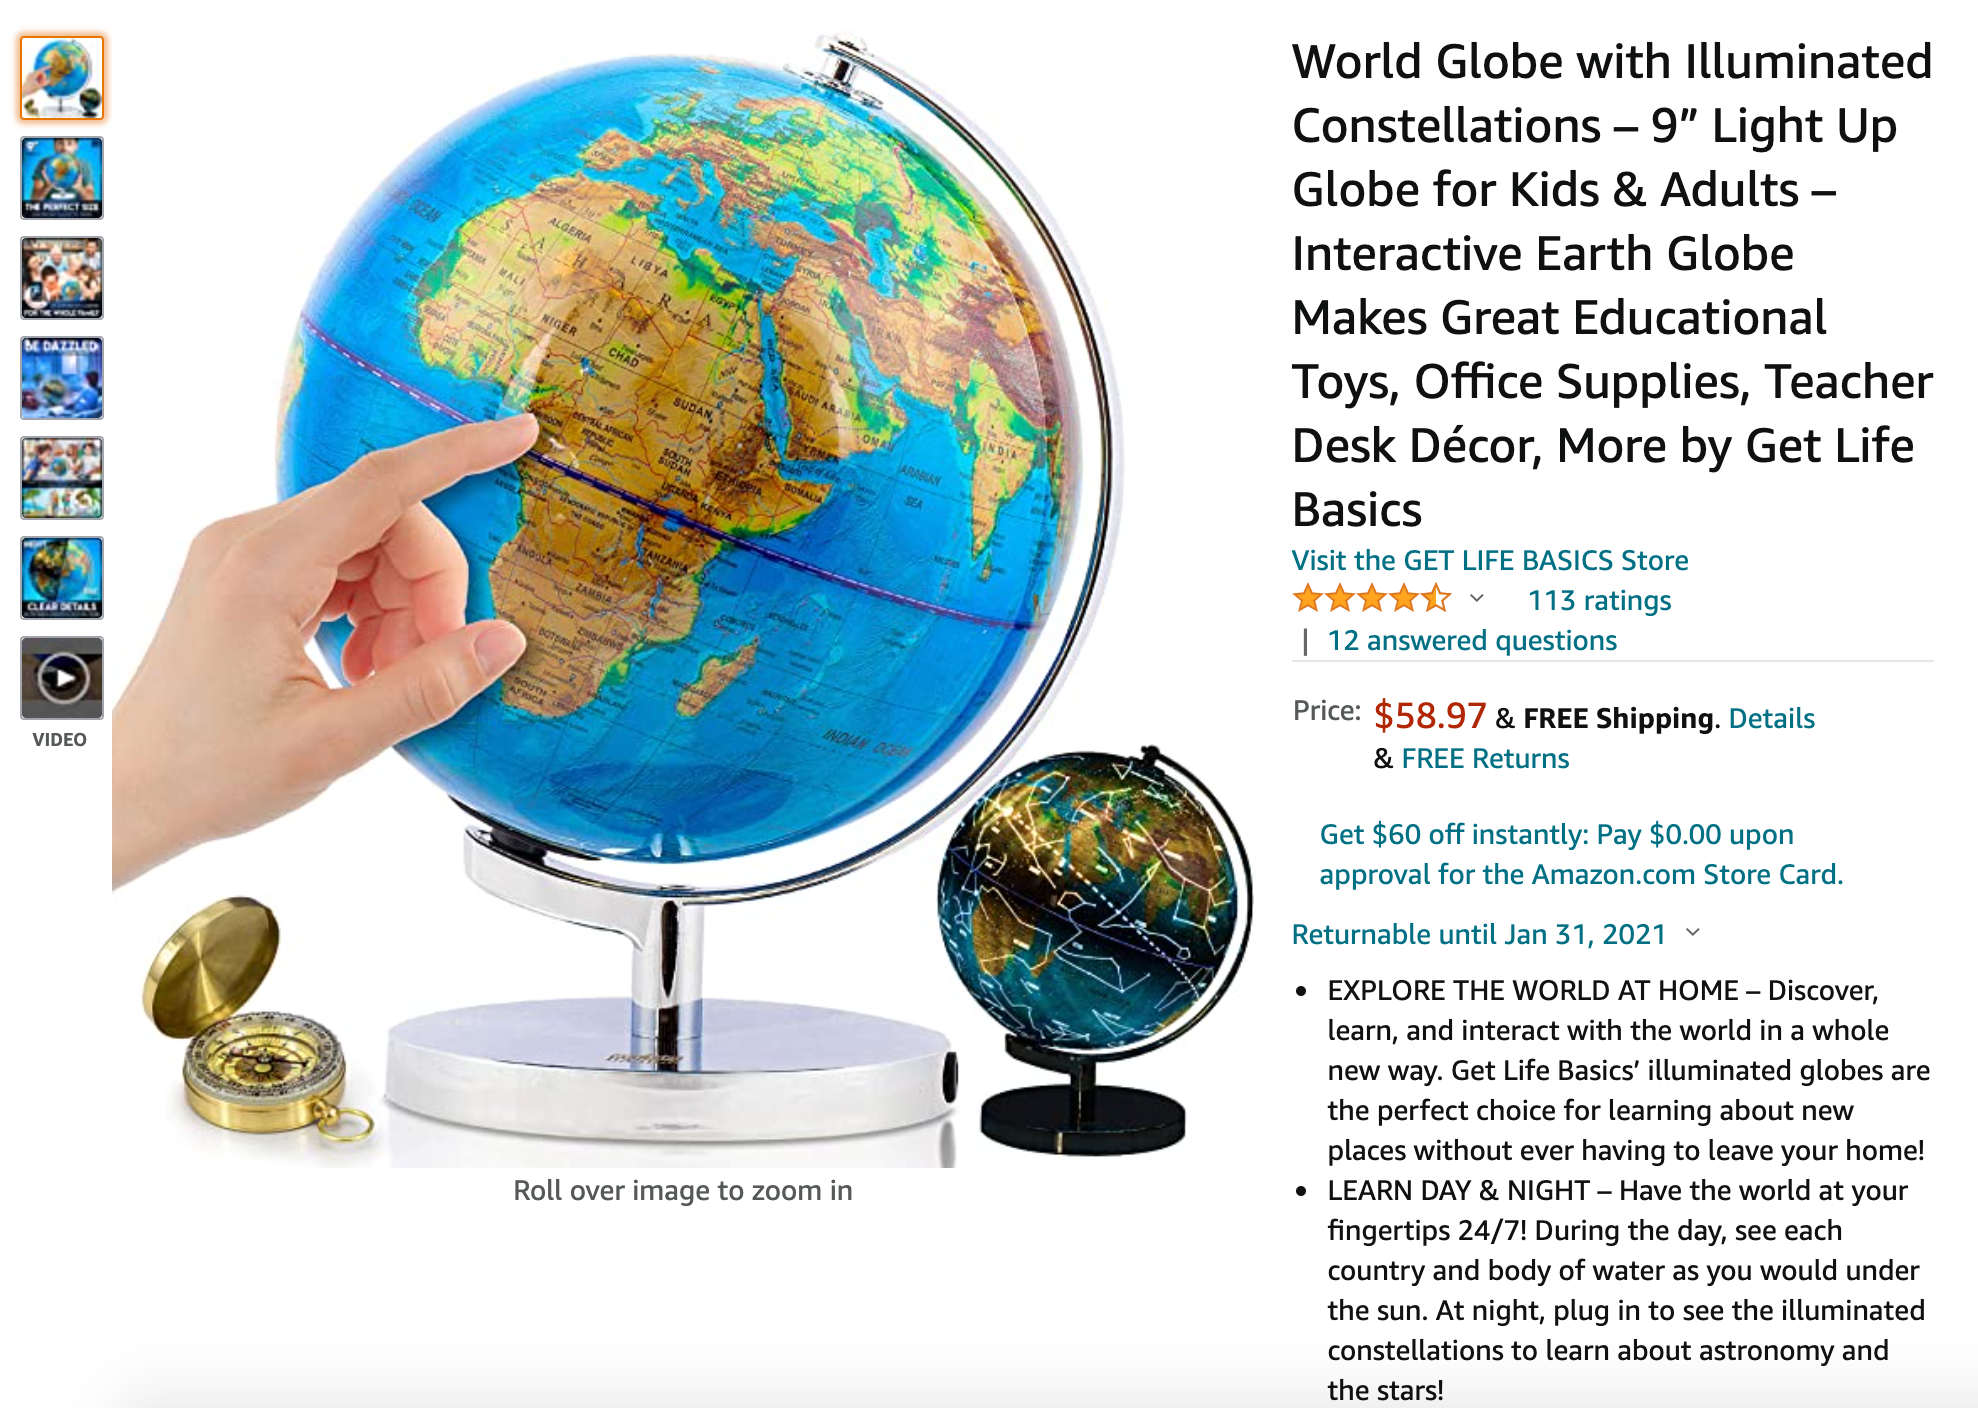 World Globe with Illuminated Constellations – 9” Light Up Globe for Kids & Adults.jpg